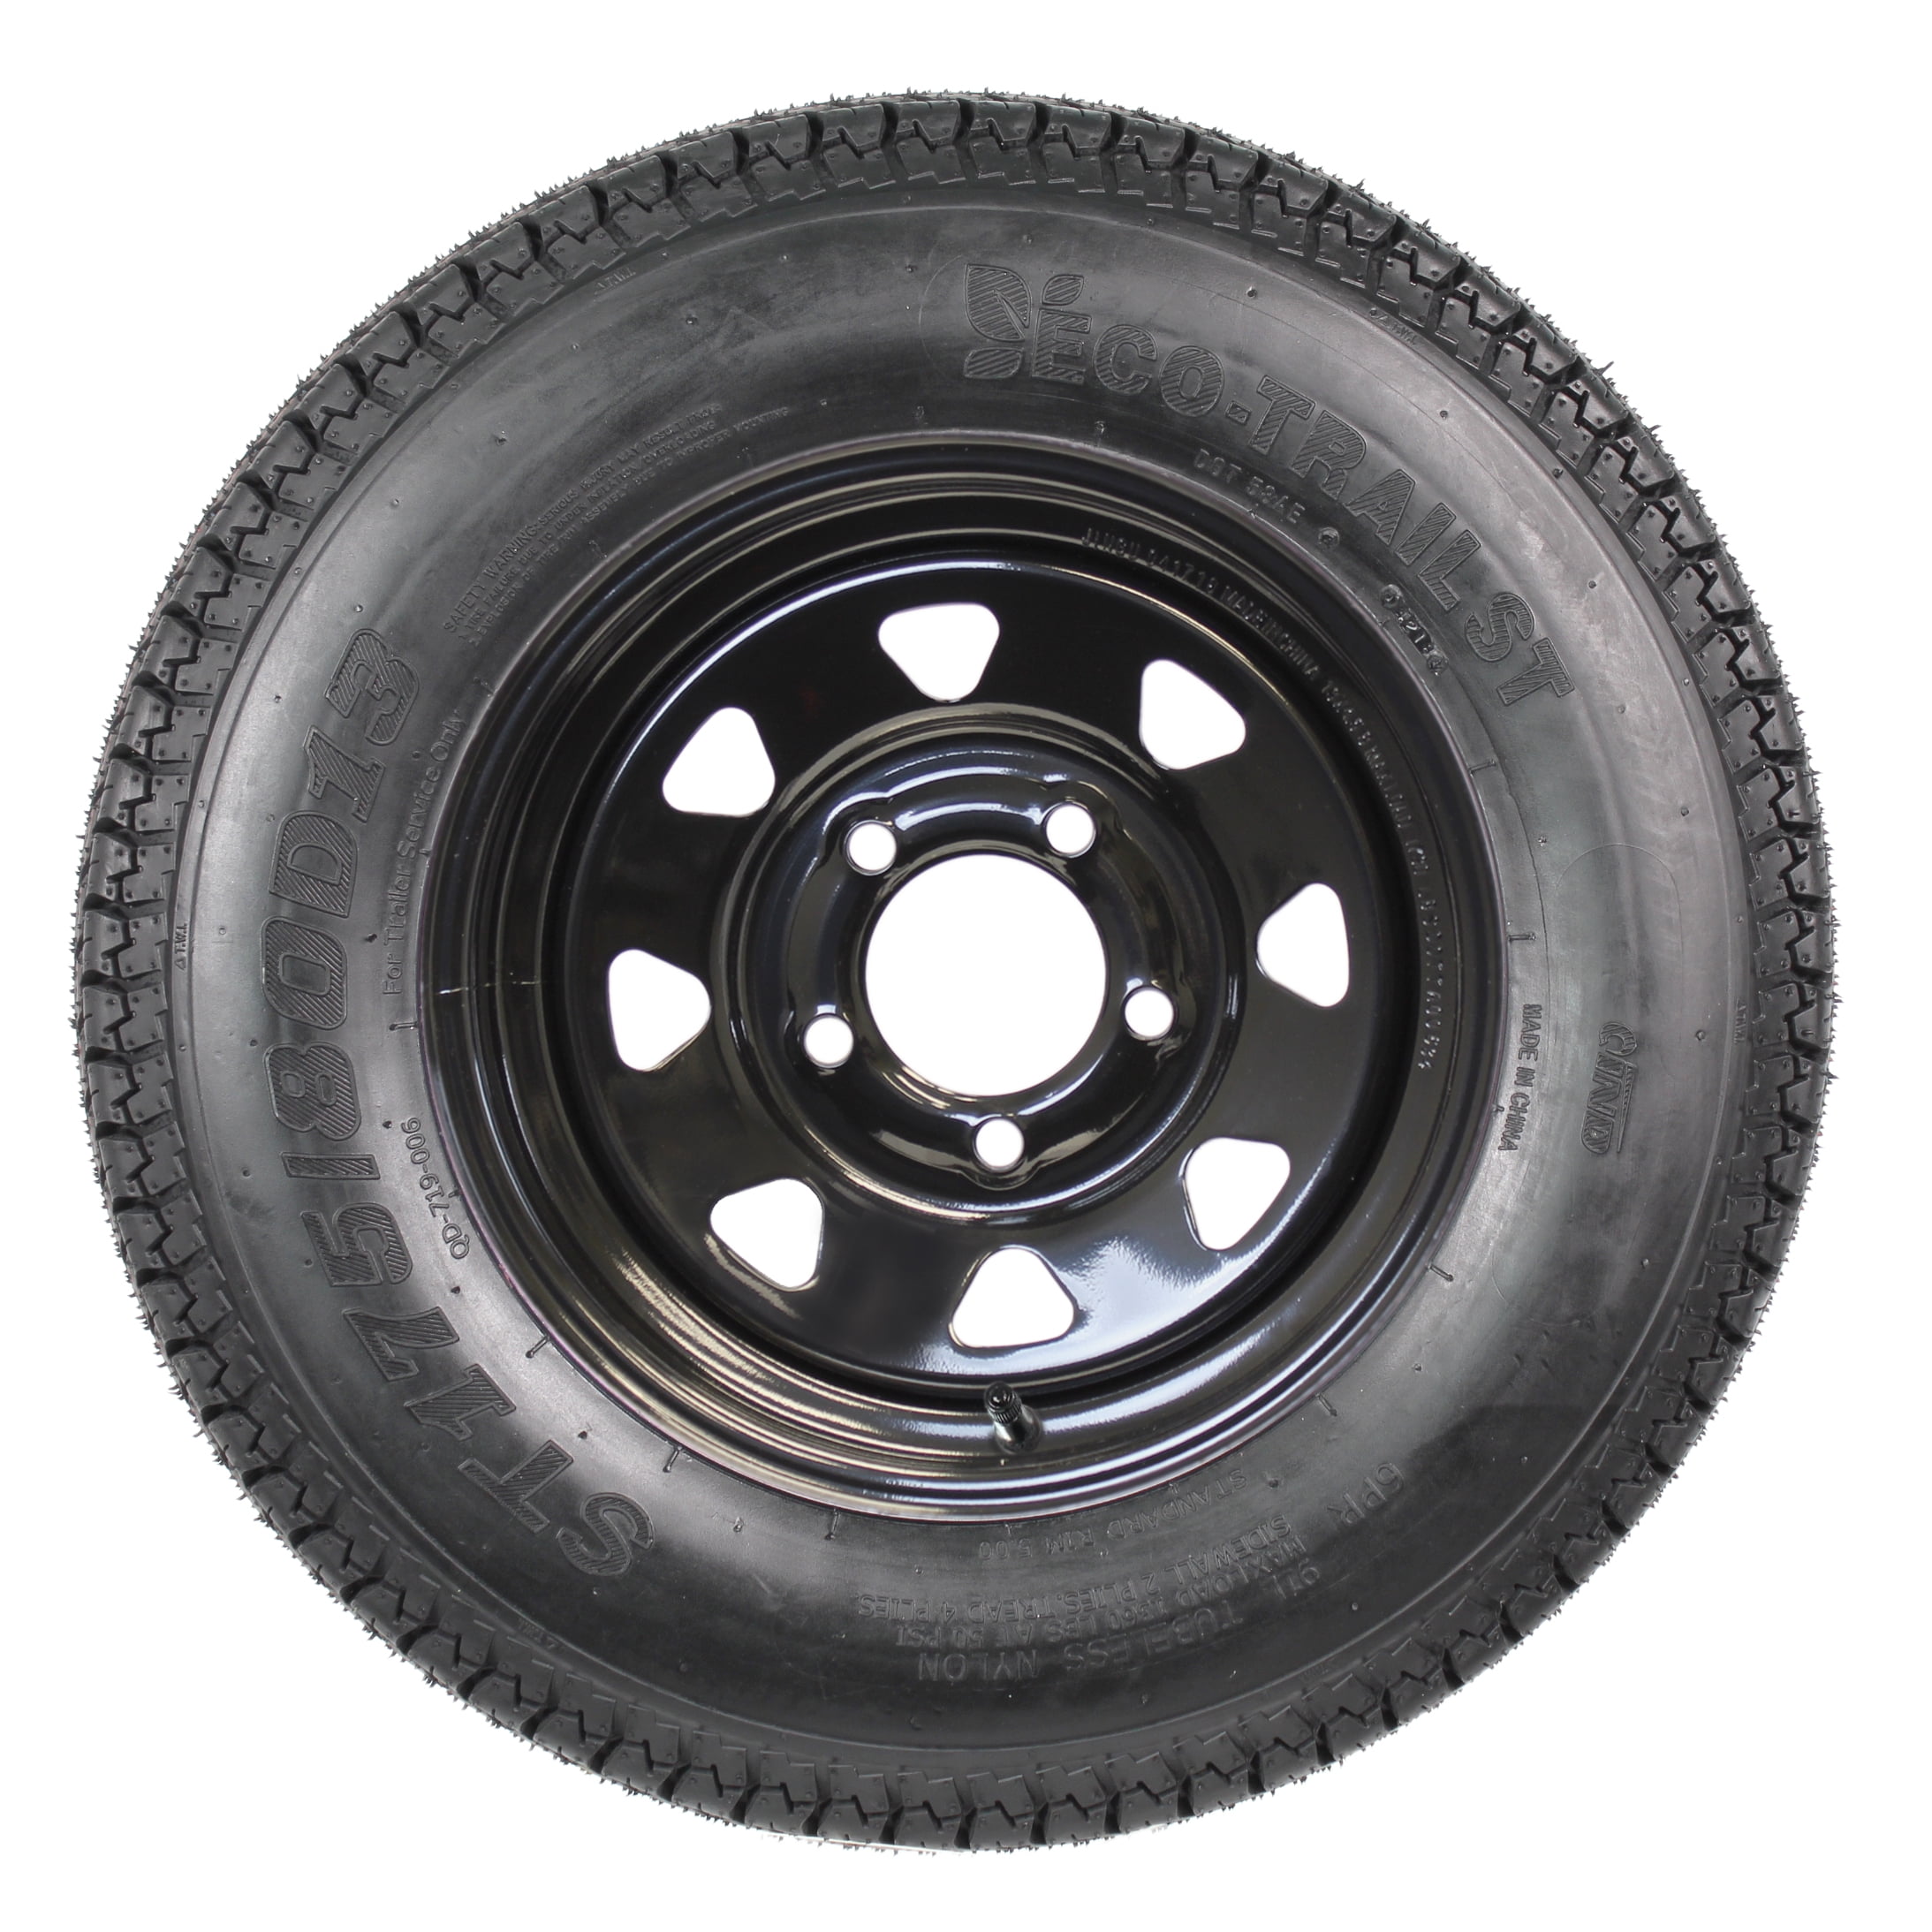 Set of 13 Trailer Tires & RimsST175/80D13 ST175/80D-13 6PR H188 5 Lug White Spoke Steel Wheel 2 